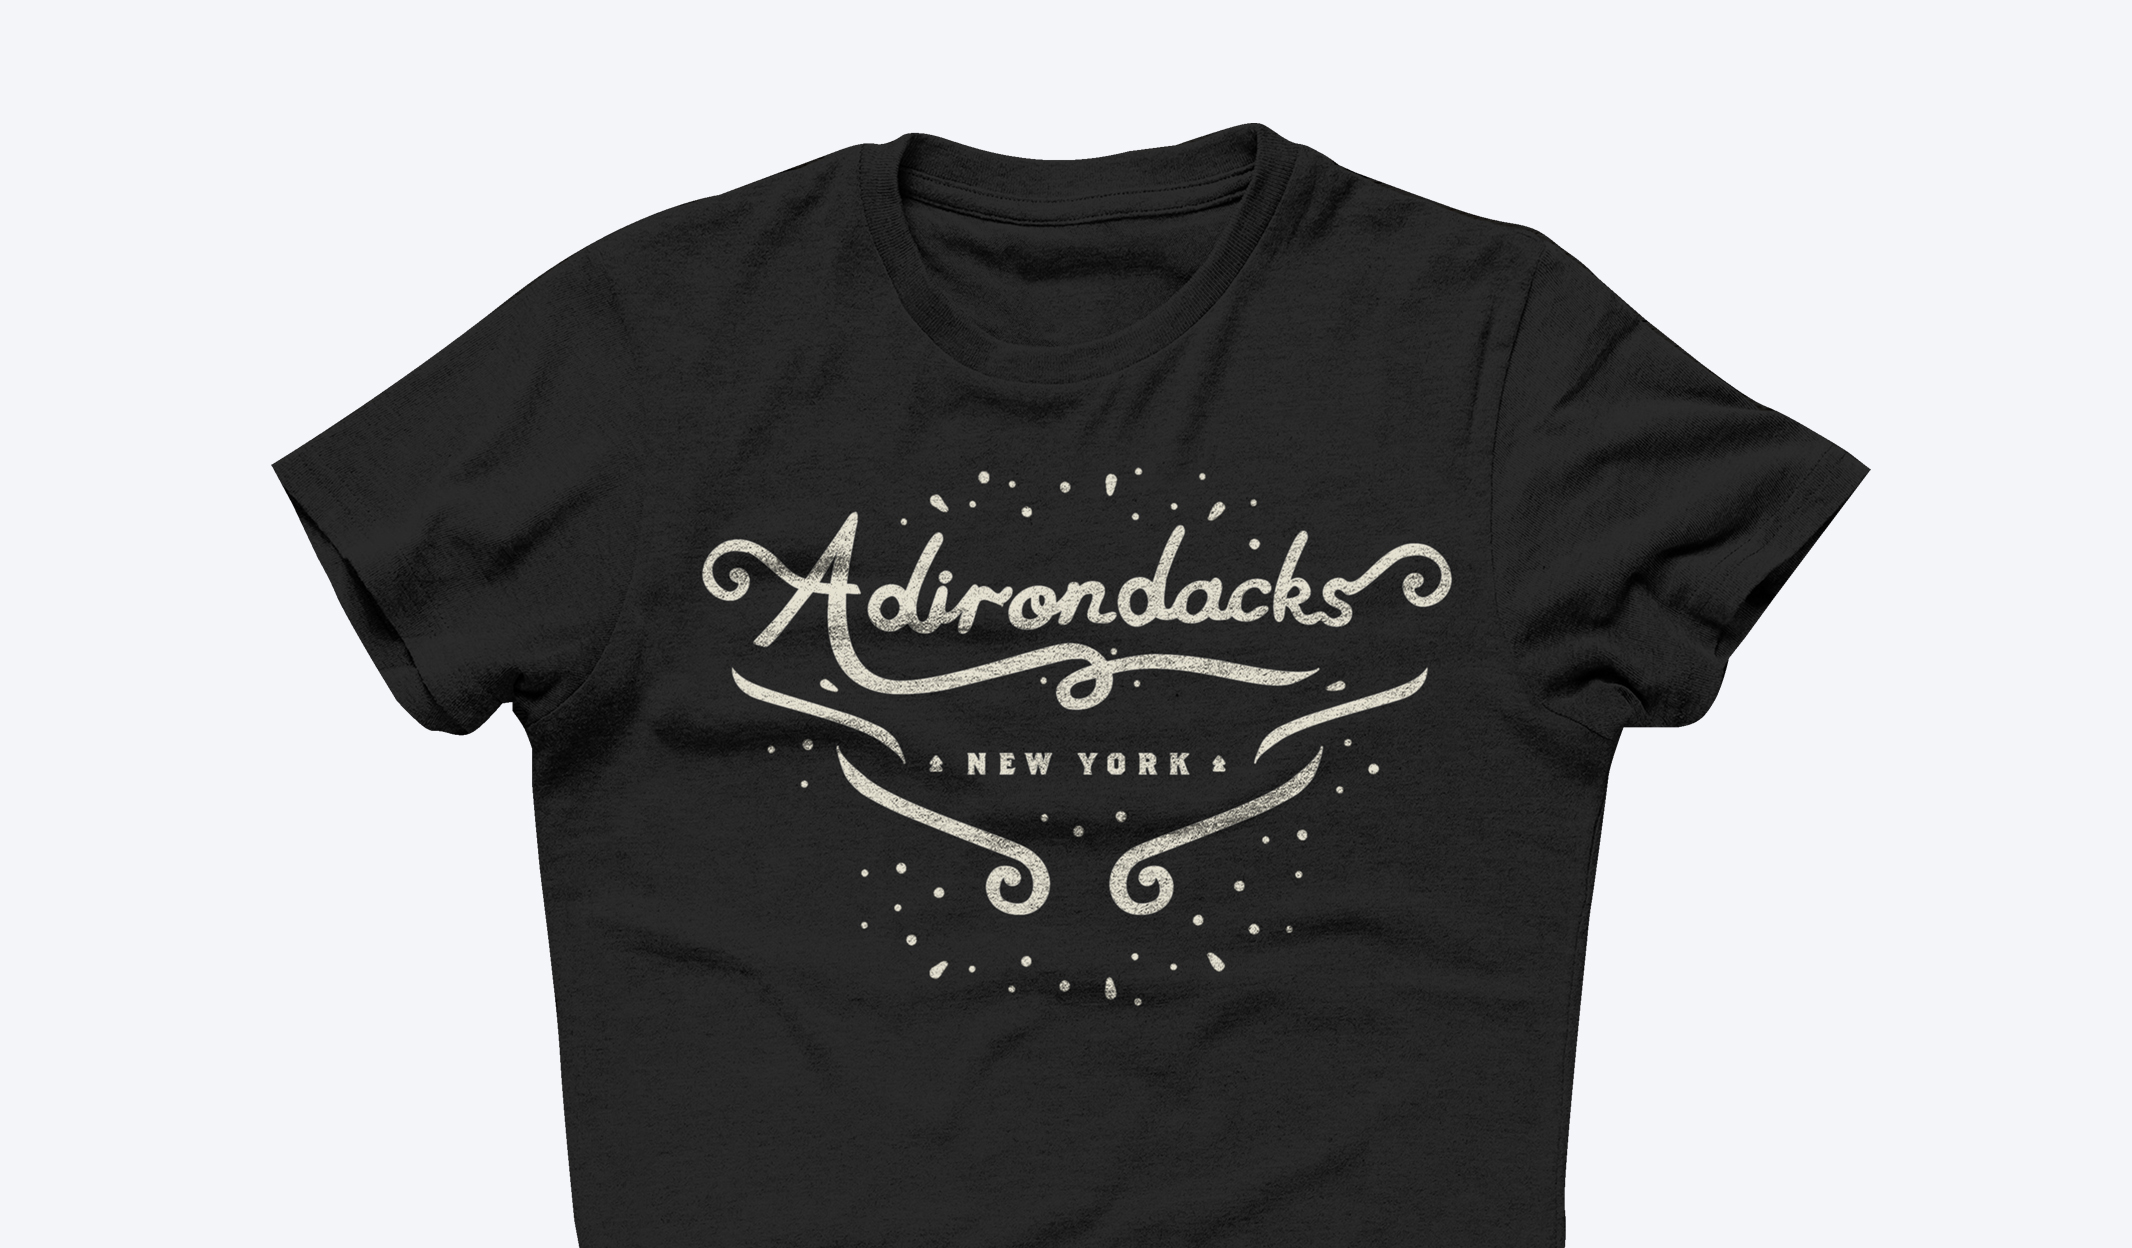 zeki-michael-adirondacks-ny-illustration-designer-design-selected-for-sale-tshirt.JPG